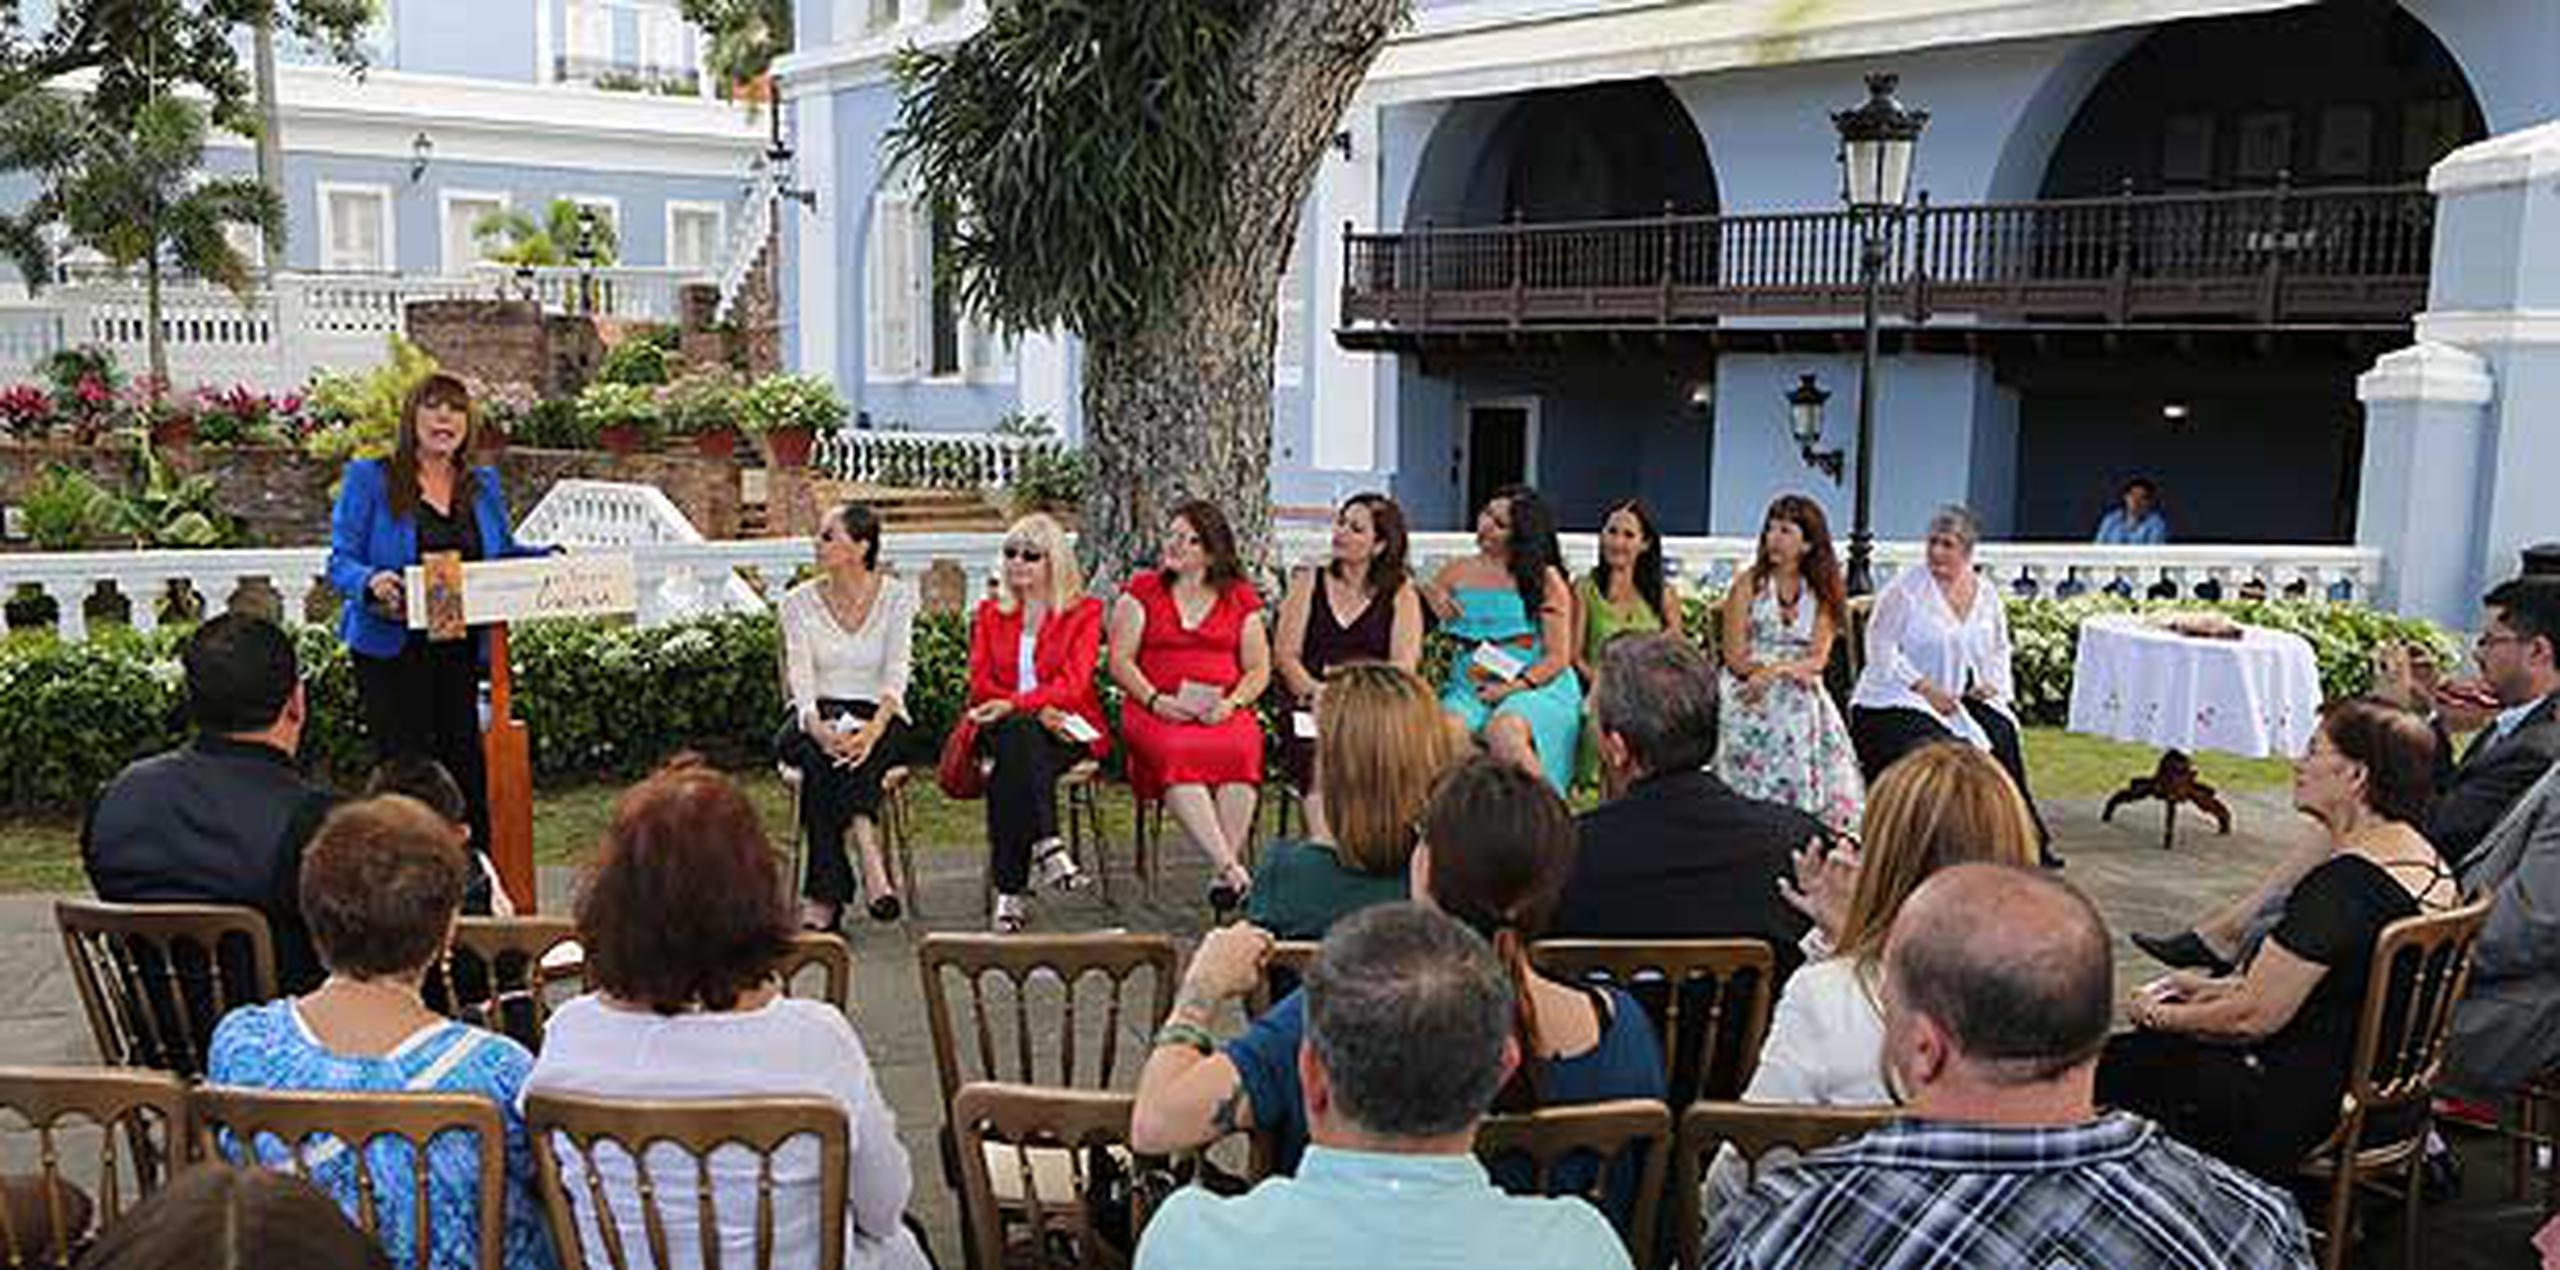 Las mujeres homenajeadas fueron Dafne Elvira, Emma Colón Zayas,  Mildred Lluch, Ángela López Borrero, Maliangee Pérez, Ivonne Belén, Marién Torres y Gloria Sáez. (Suministrada)